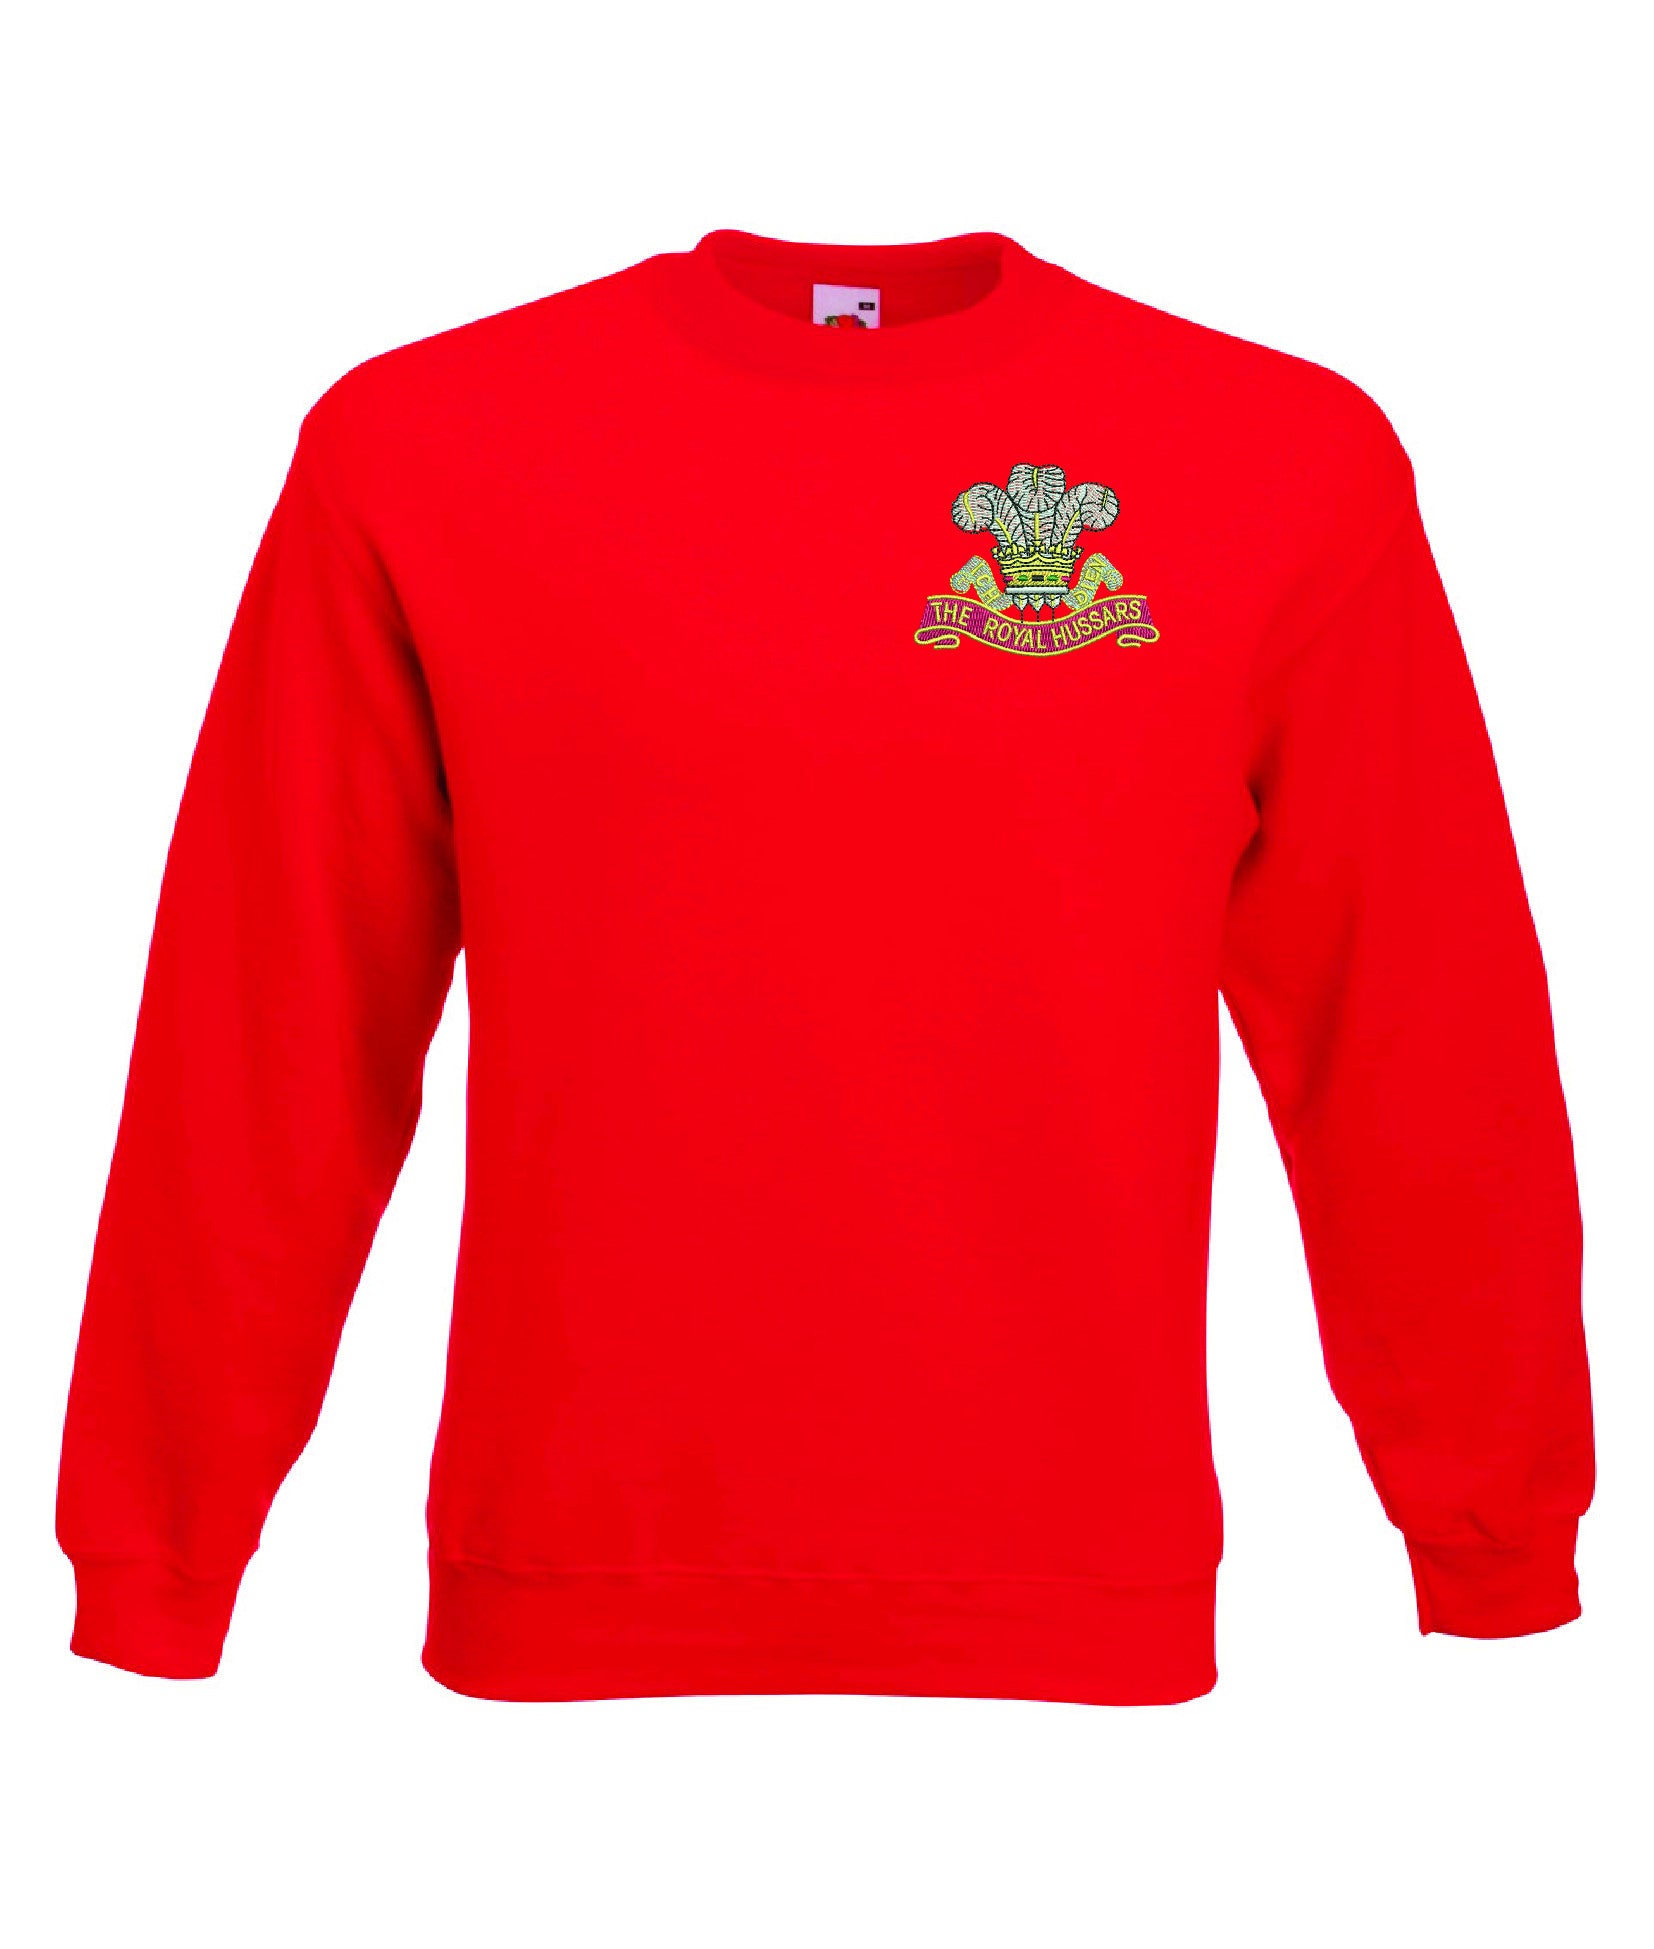 Royal Hussars Sweatshirt